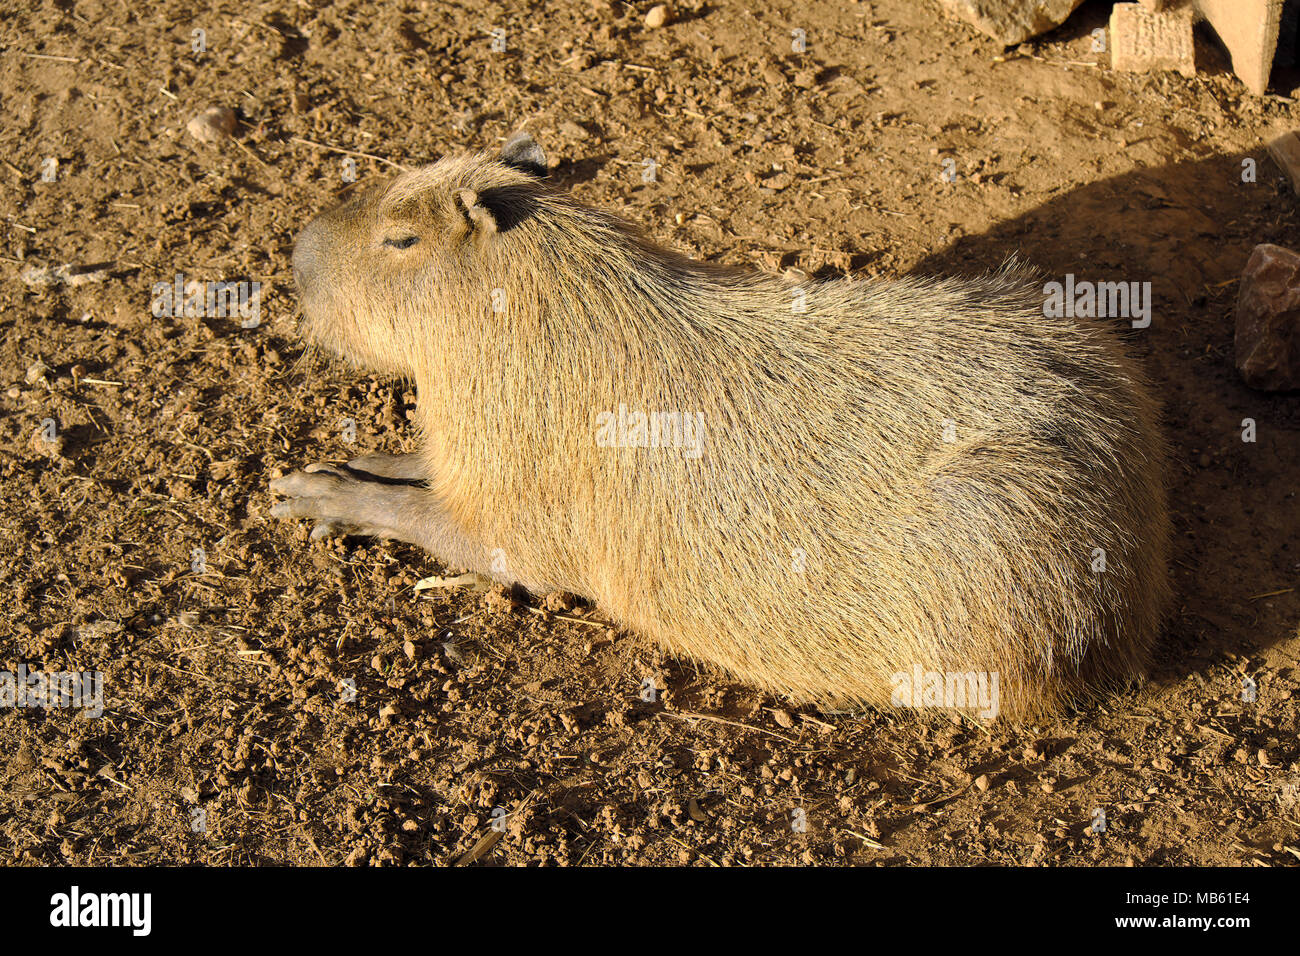 Single Capybara, known also as Chiguire or Carpincho, Hydrochoerus hydrochaeris, in a zoological garden Stock Photo